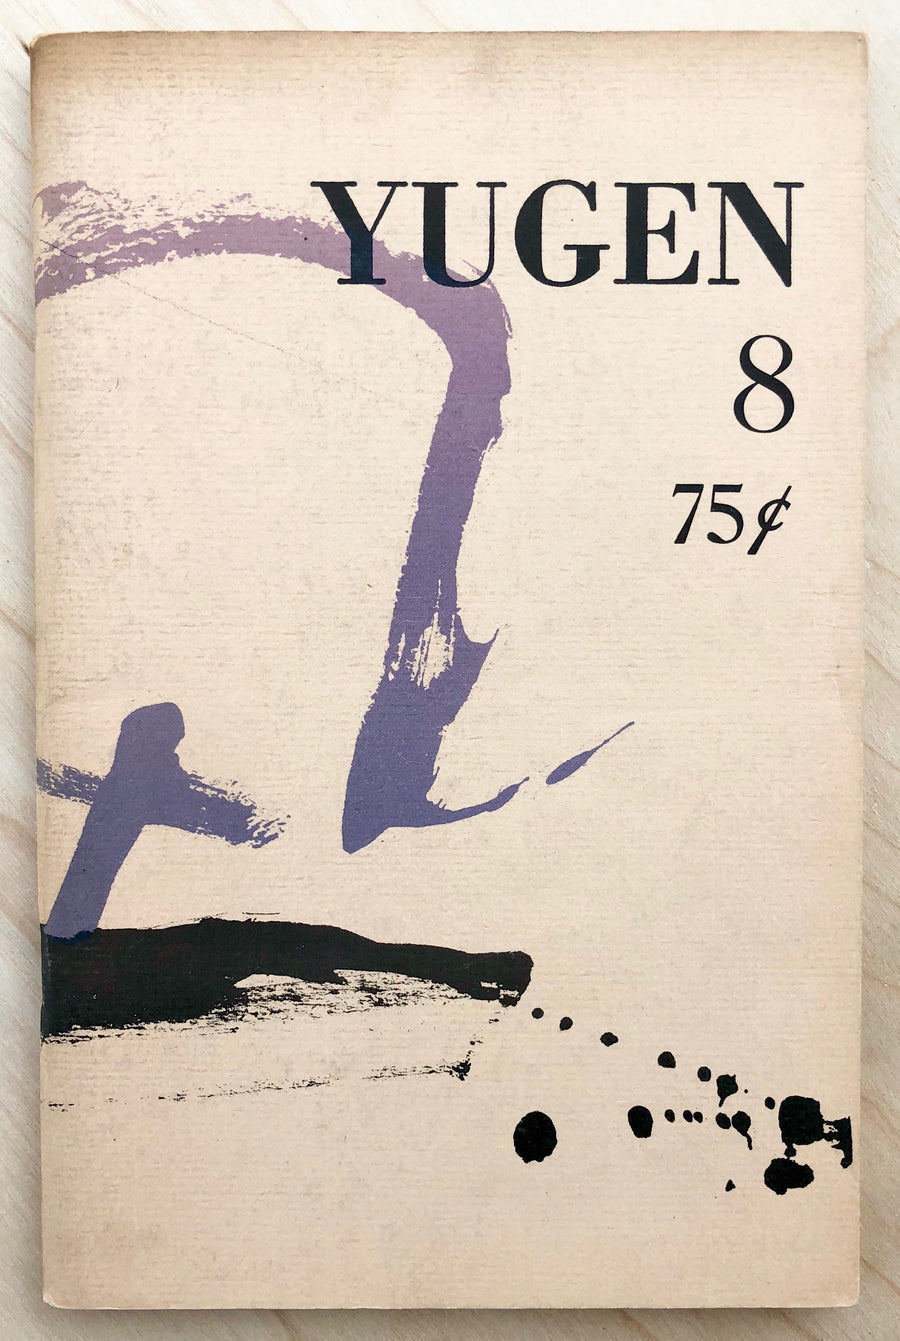 YUGEN 8 edited by LeRoi Jones